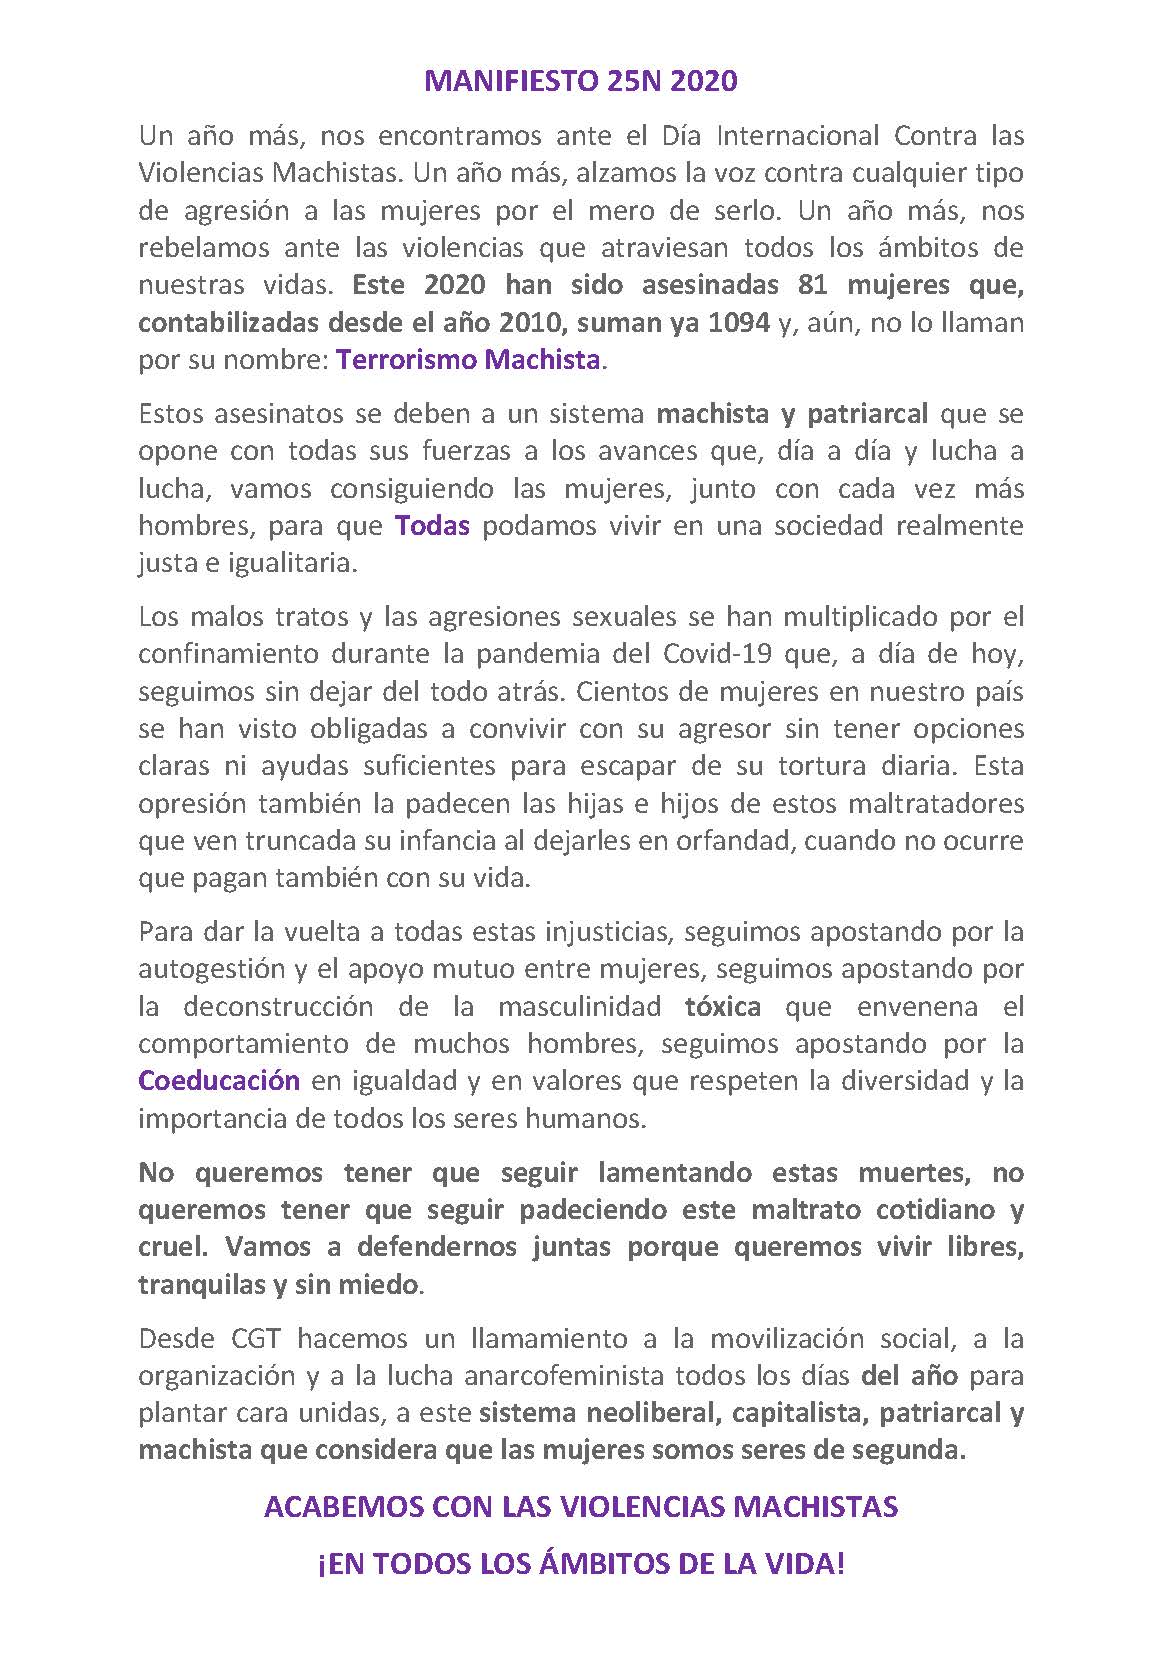 manifiesto-25n-2020-castellano